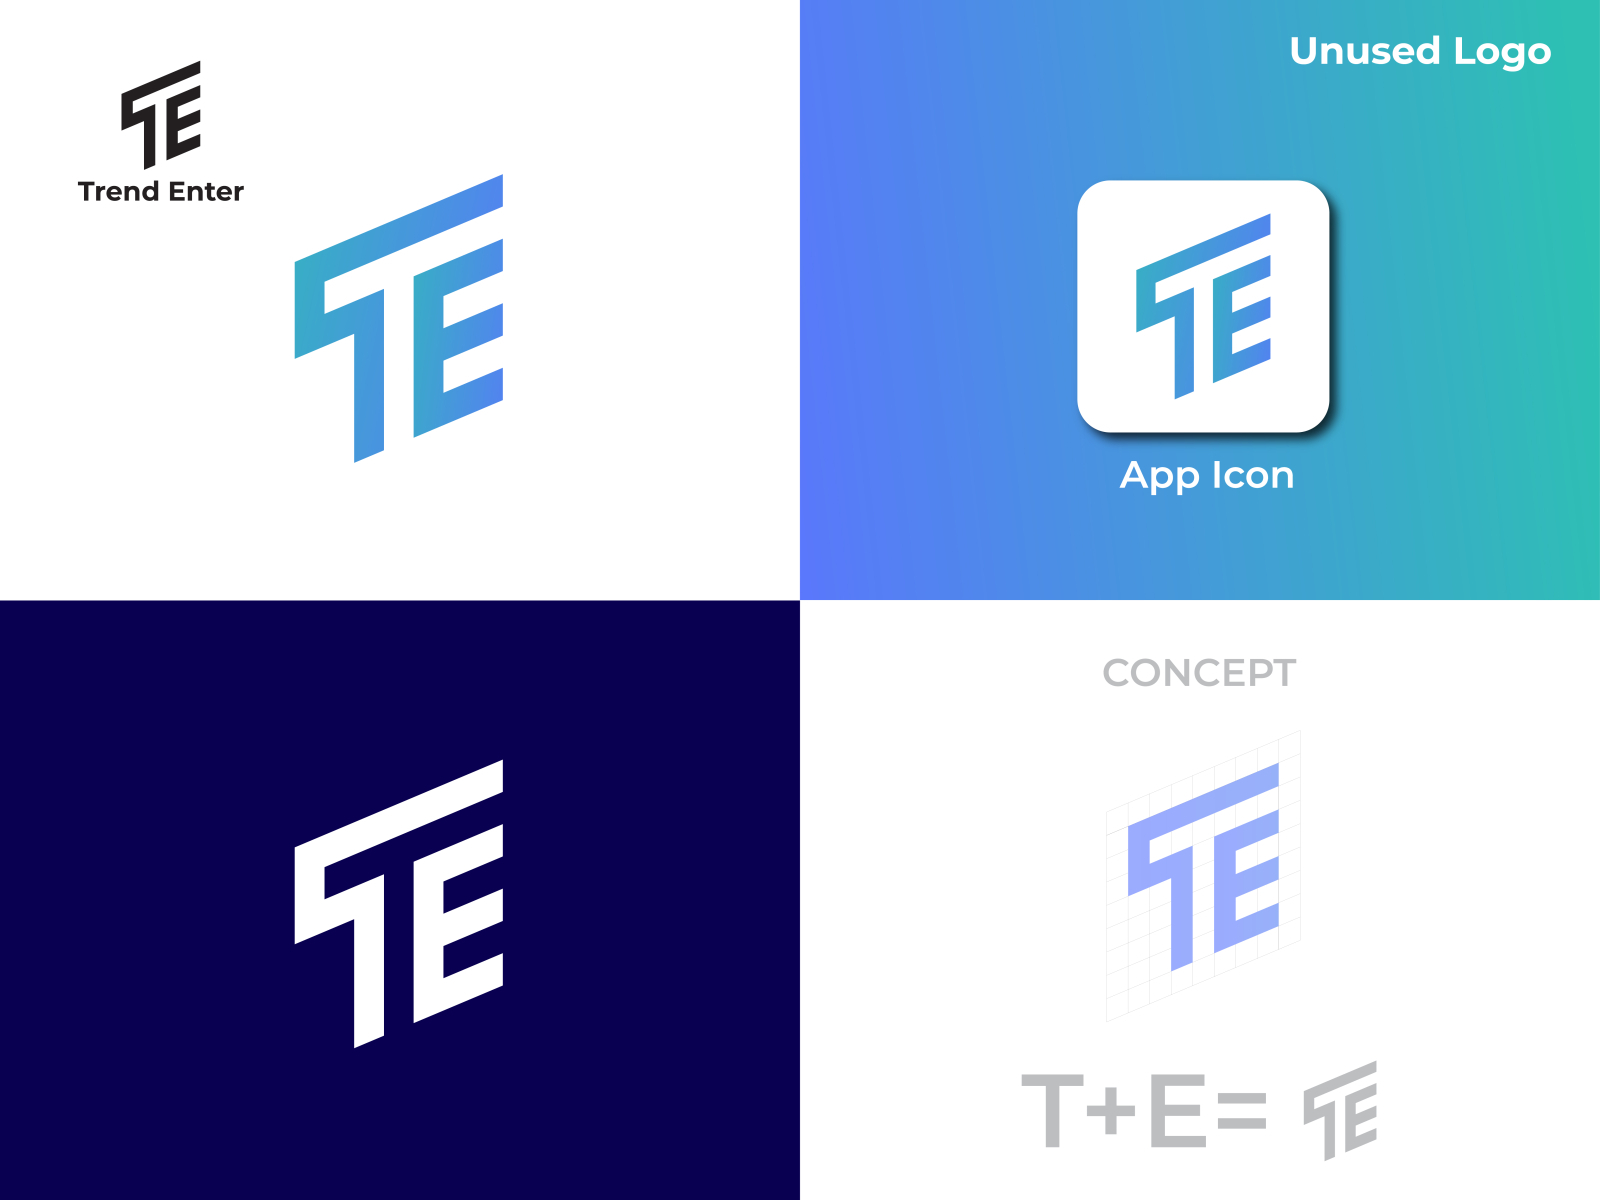 Trend Enter Logo Concept by abdullah al mamun / Logo Designer on Dribbble